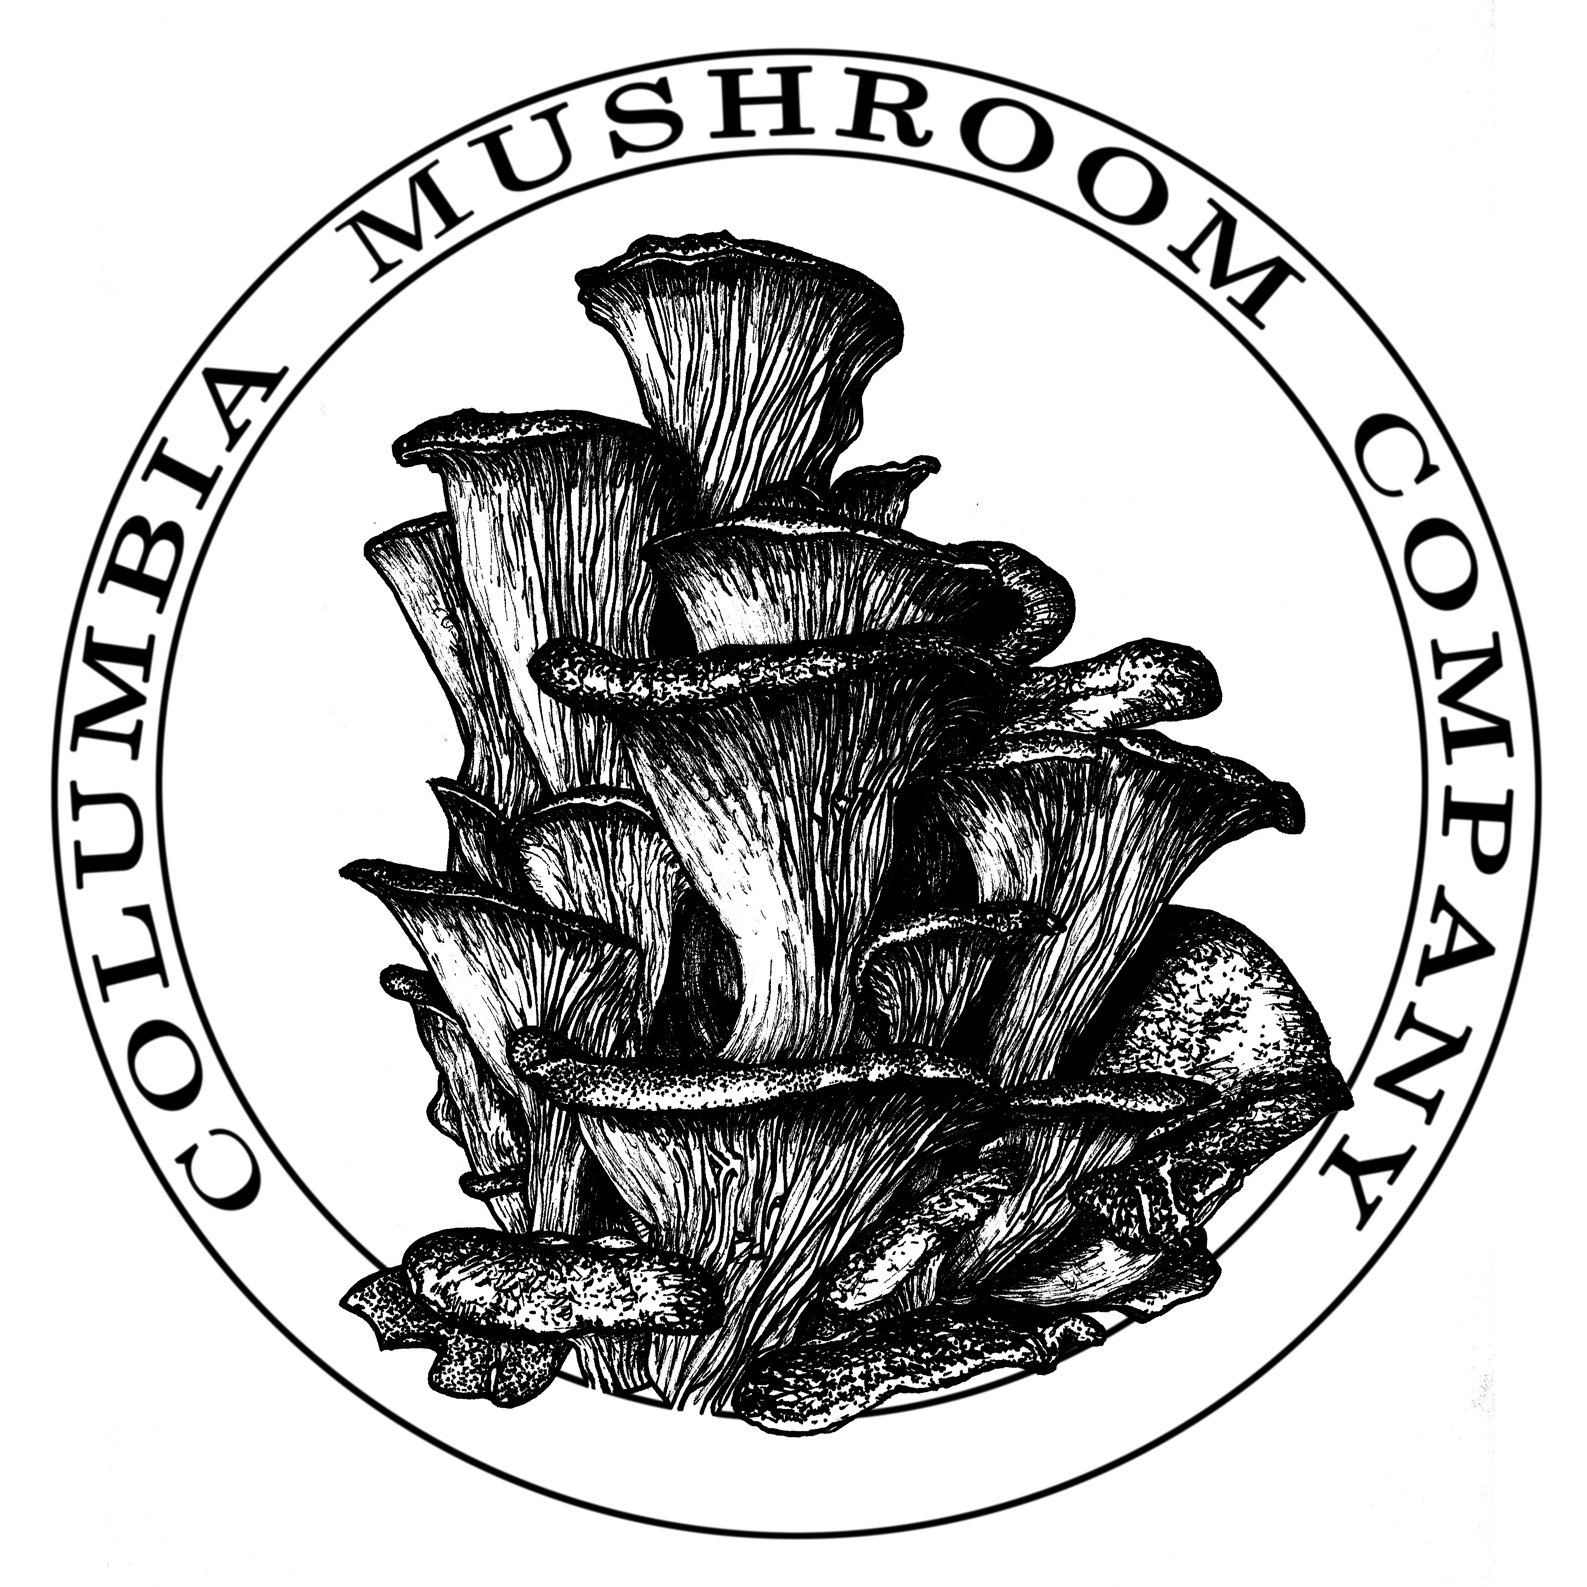 Columbia Mushroom Company